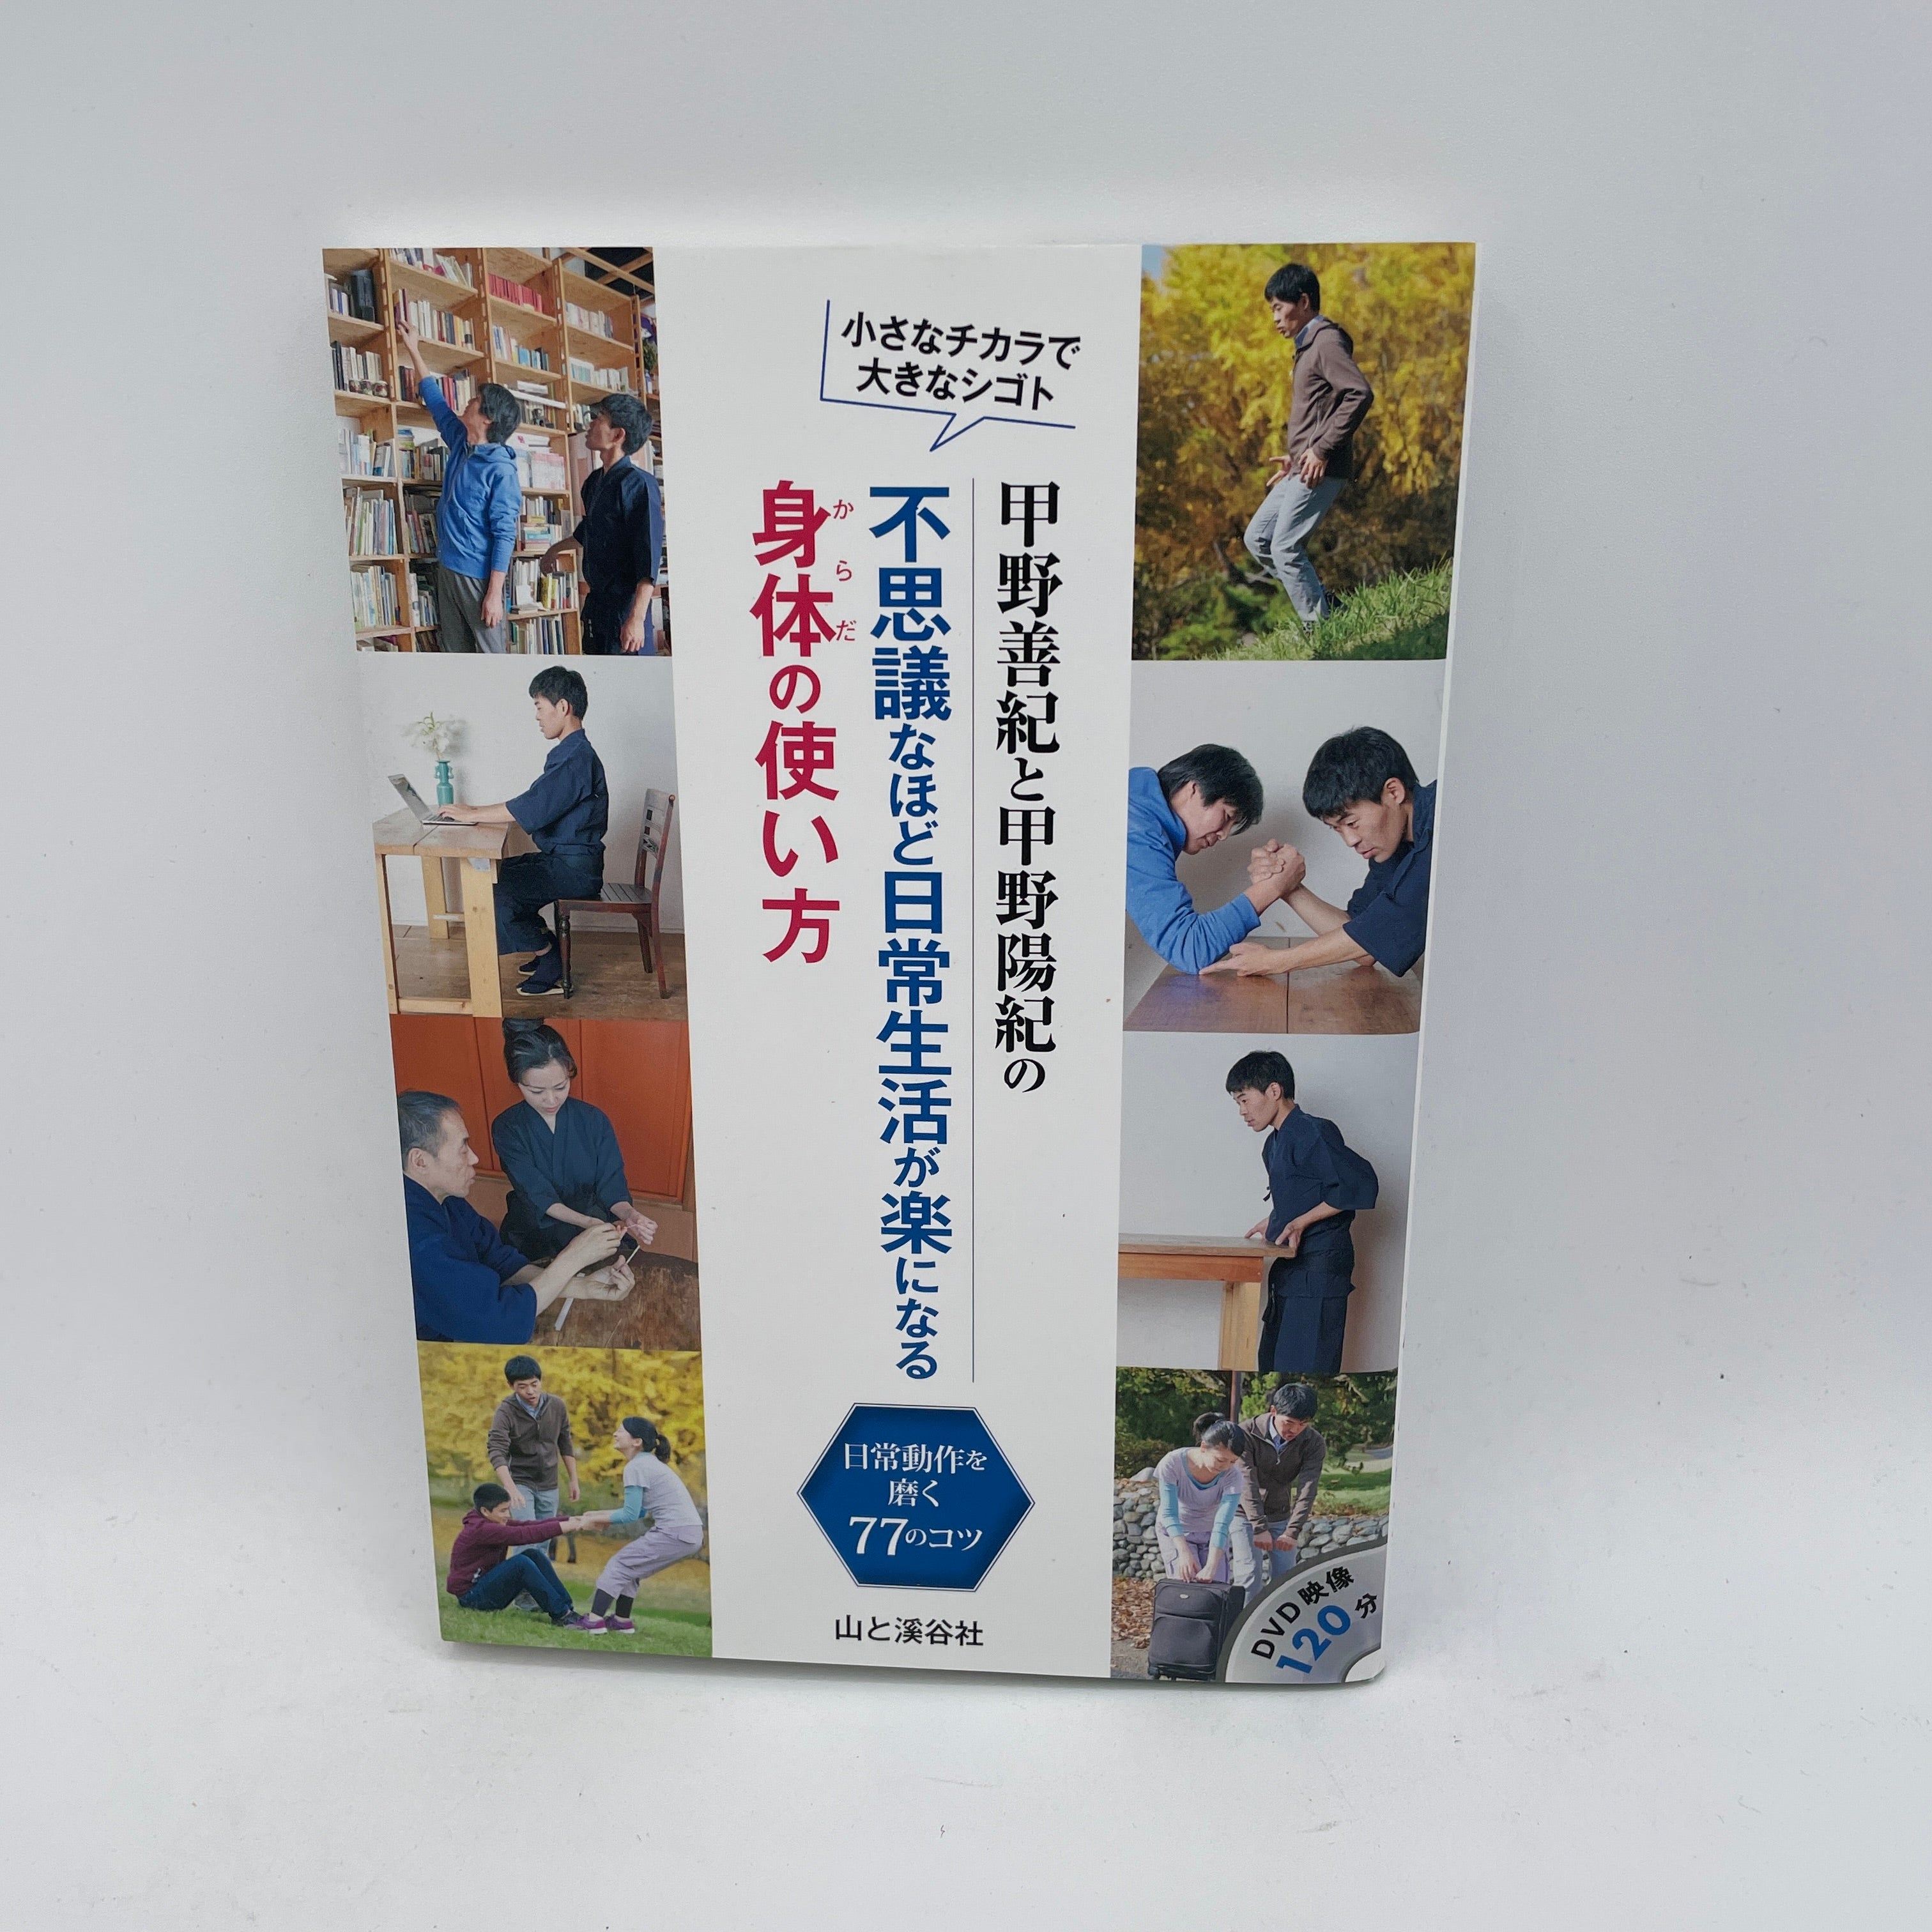 How to Use Your Body in Daily Life Book u0026 DVD by Yoshinori u0026 Yoki Kono –  Budovideos Inc